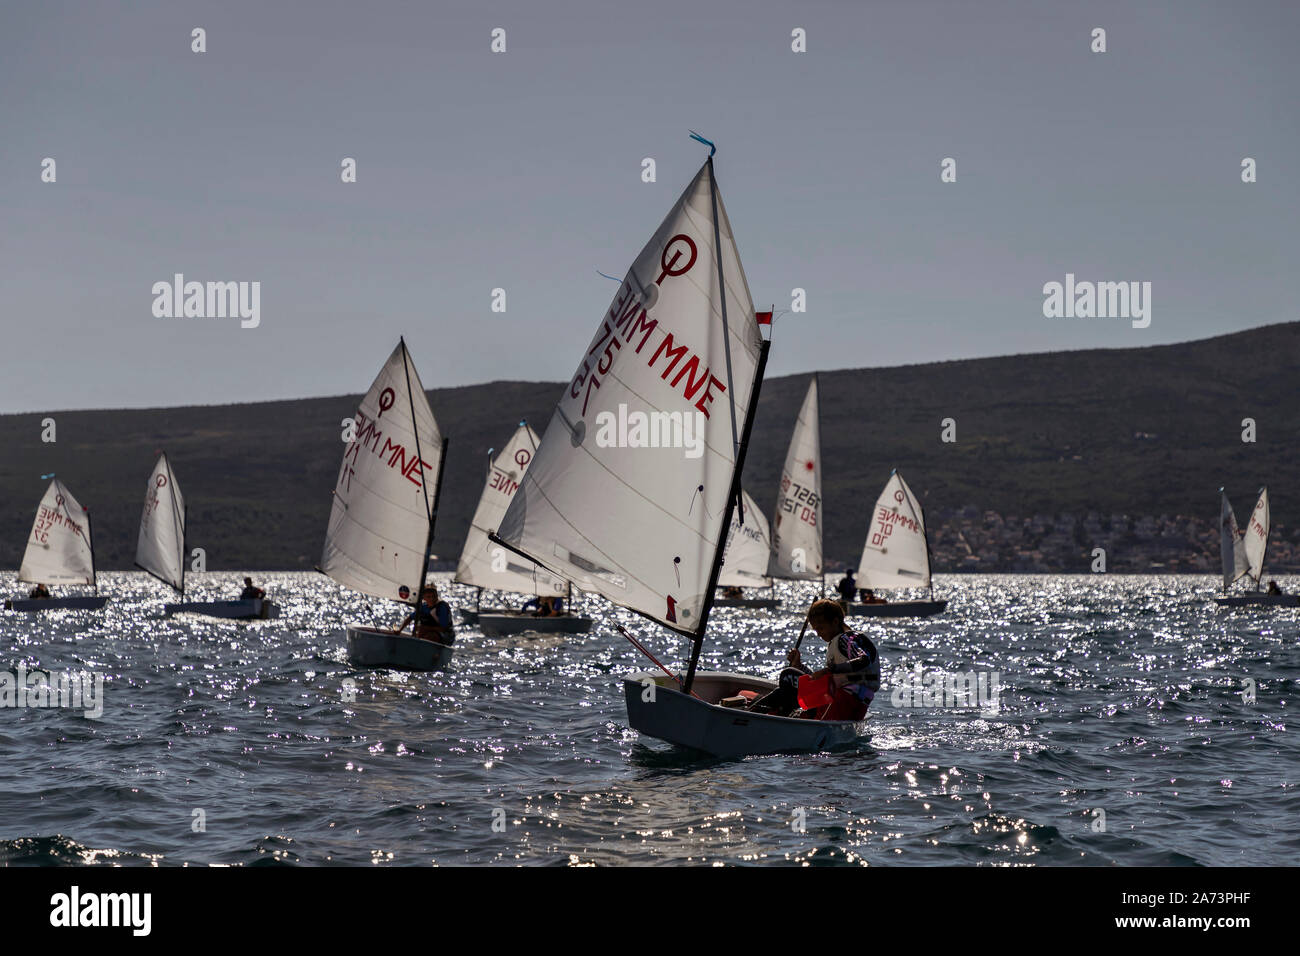 Montenegro, Sep 20, 2019: The Optimist Class dinghy sailing regatta in Kotor Bay Stock Photo